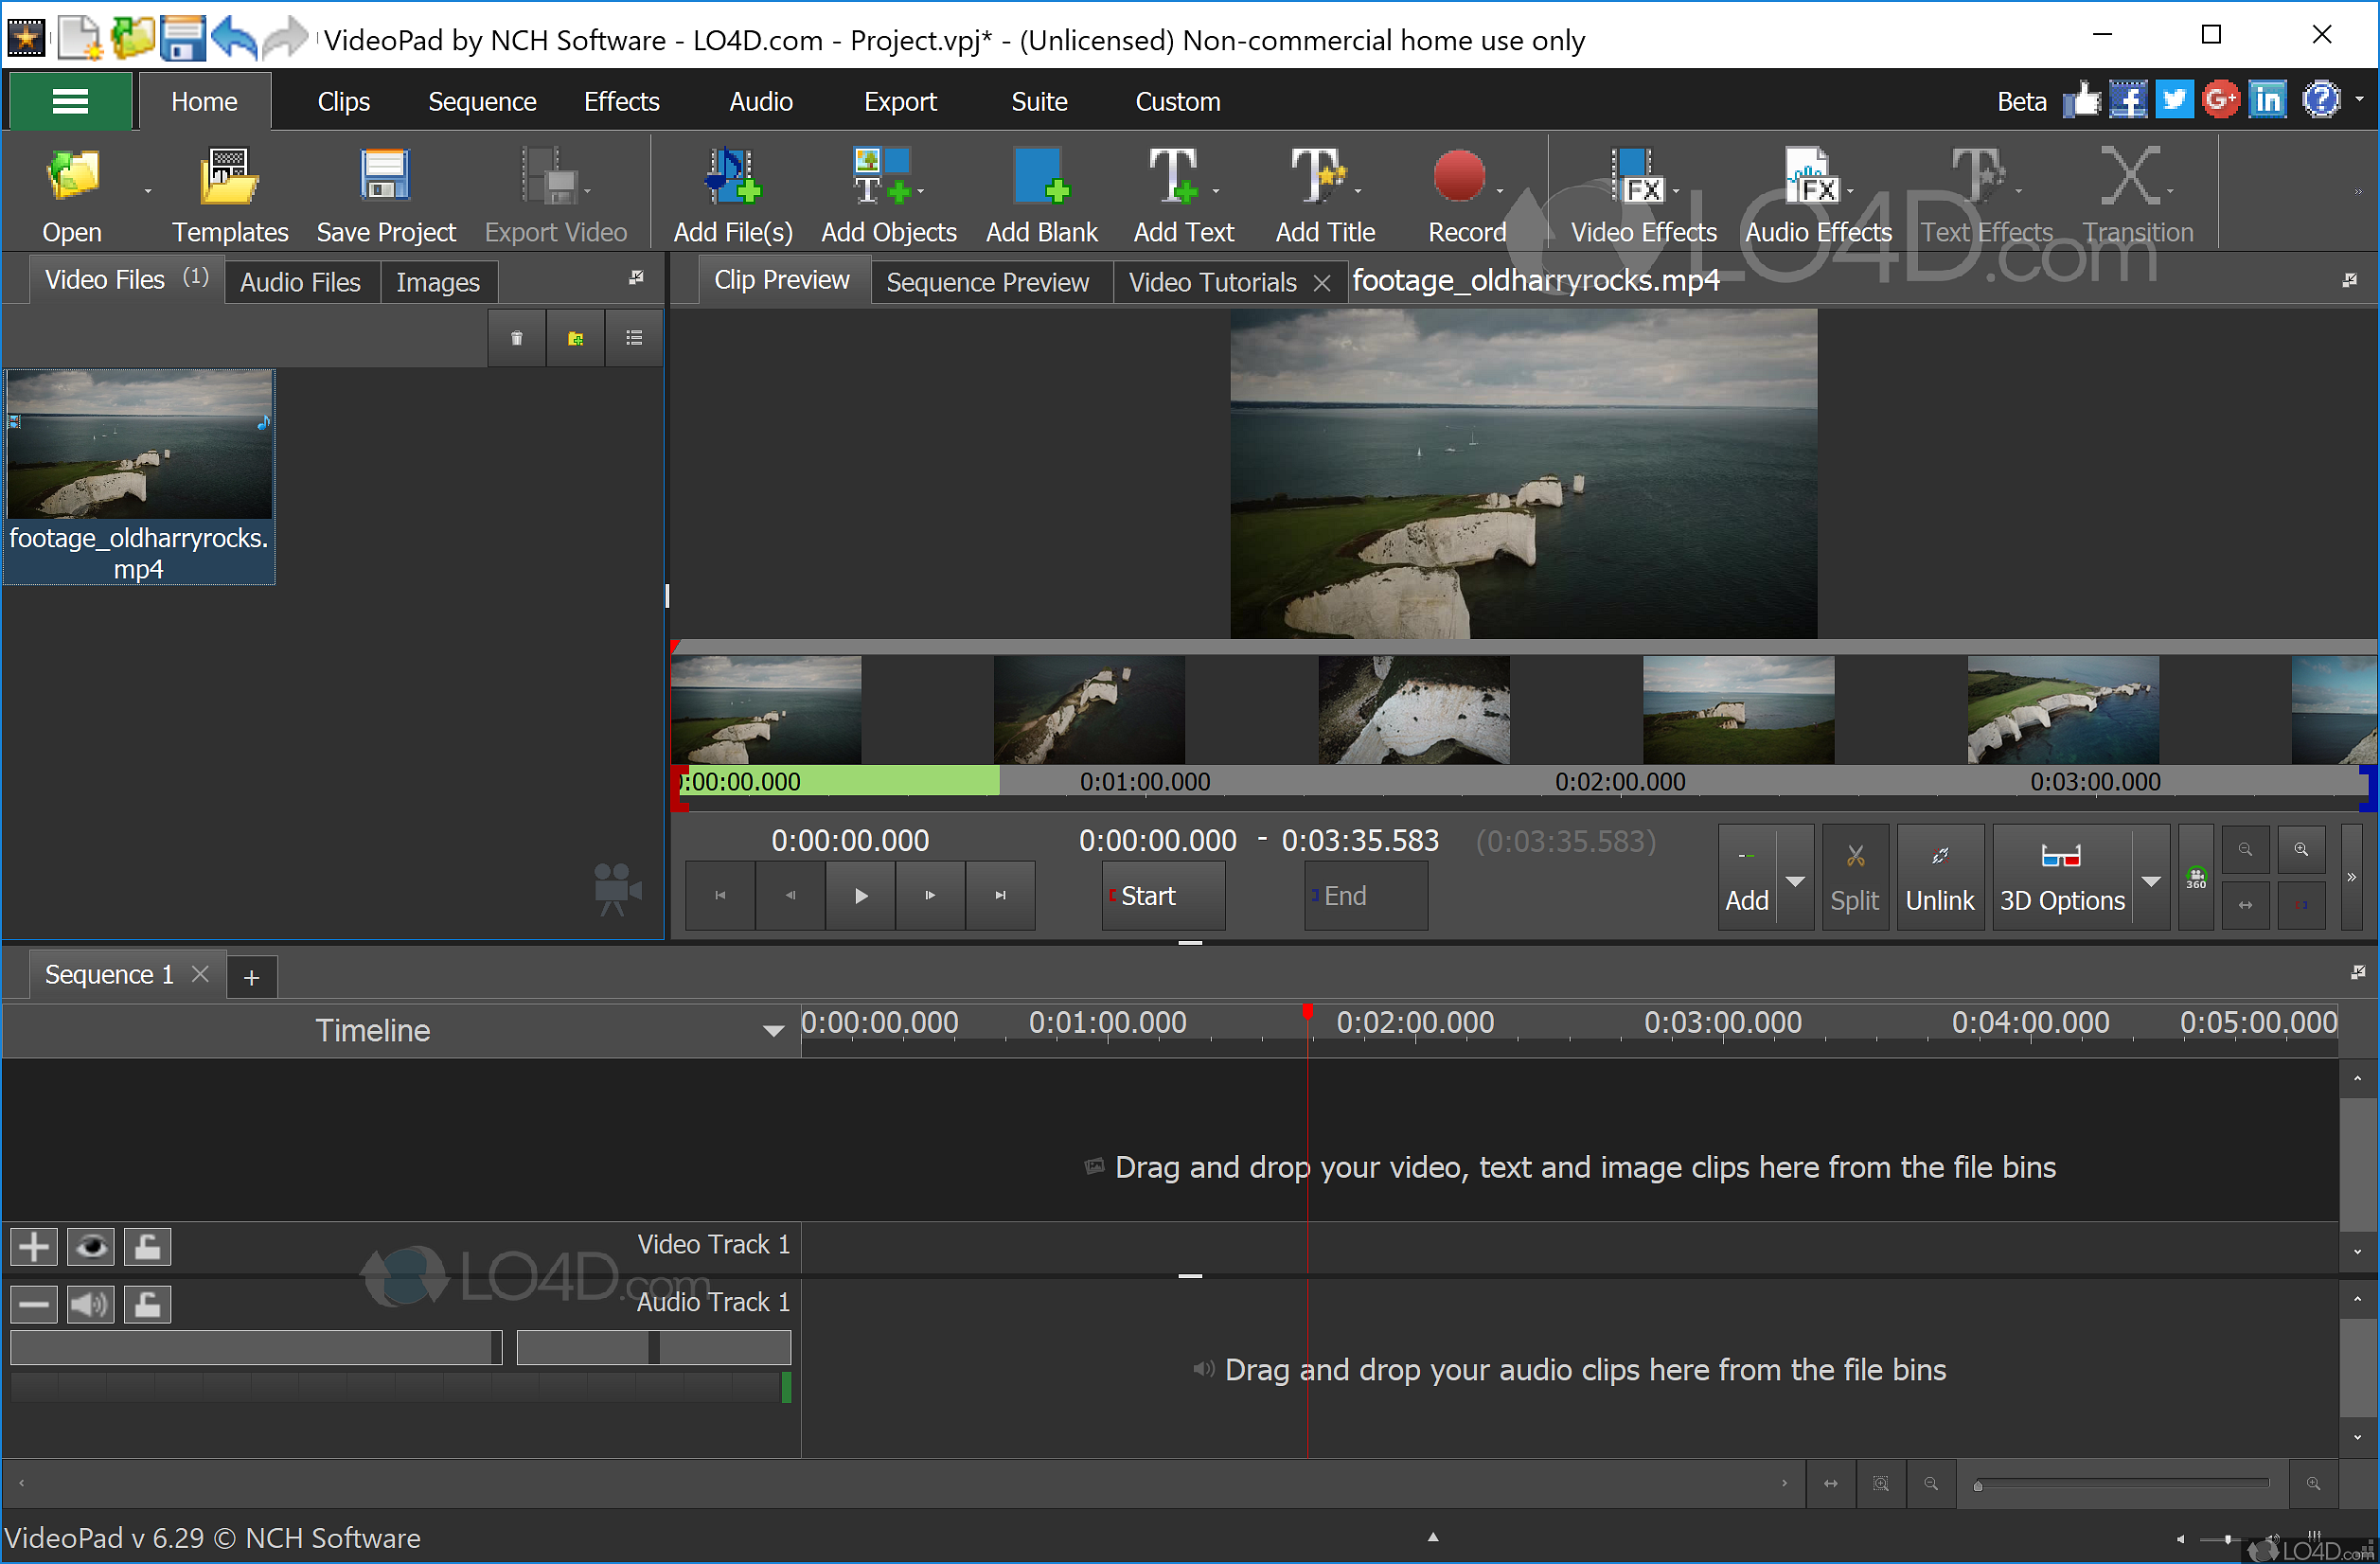 macbook video editing software free